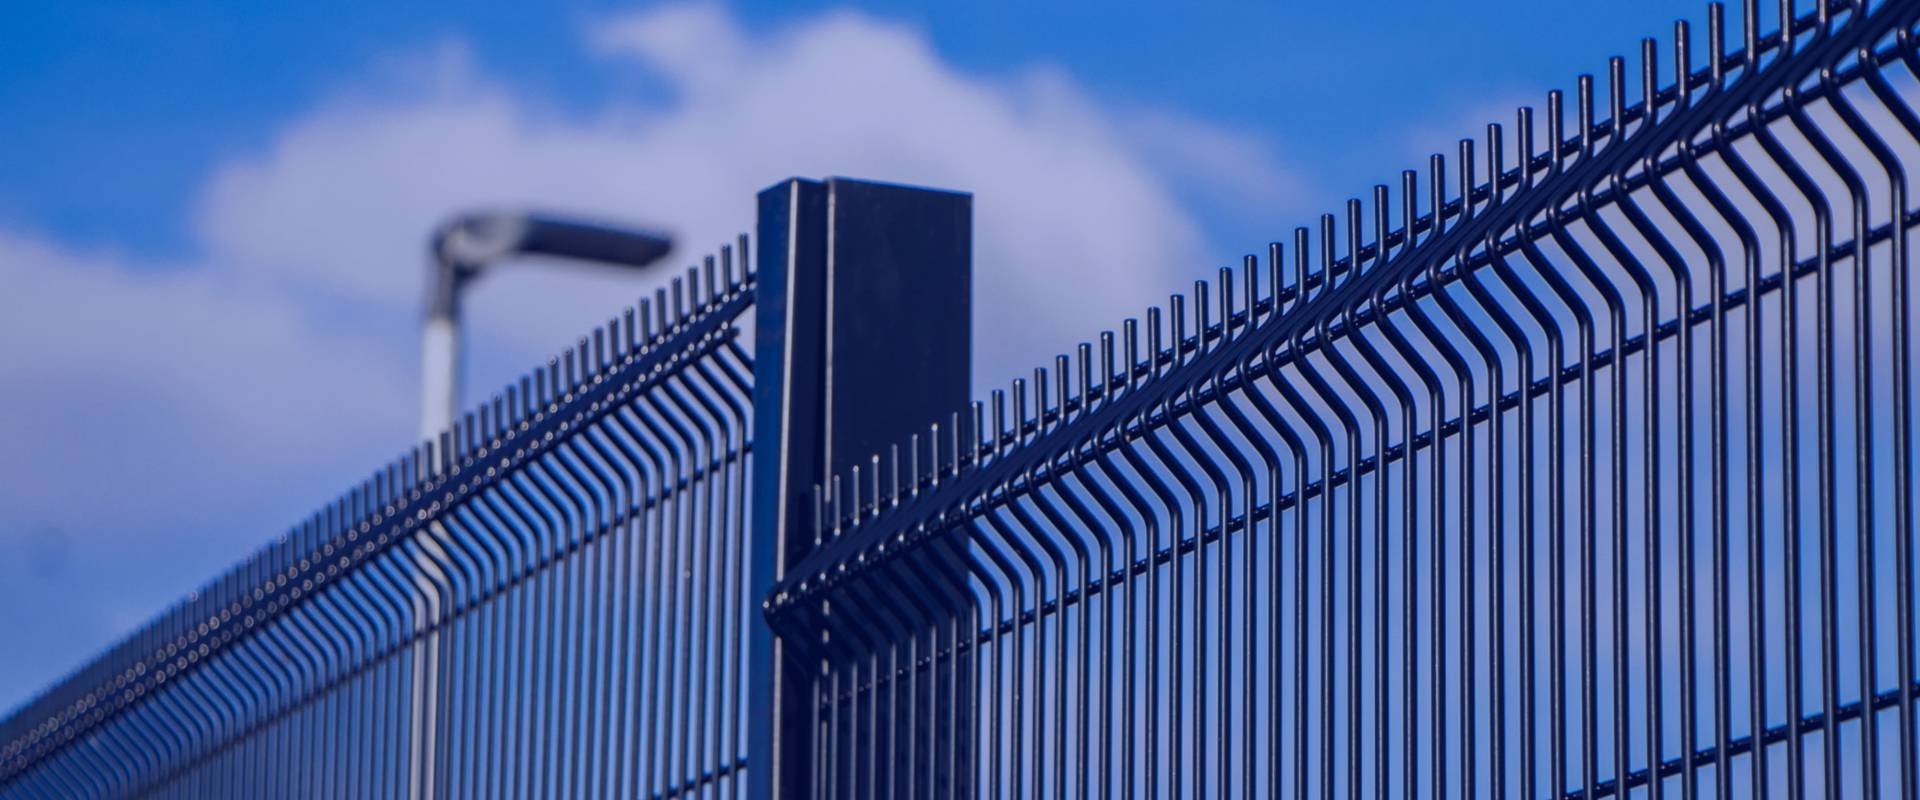 A piece of 358 high security fences under the blue sky.